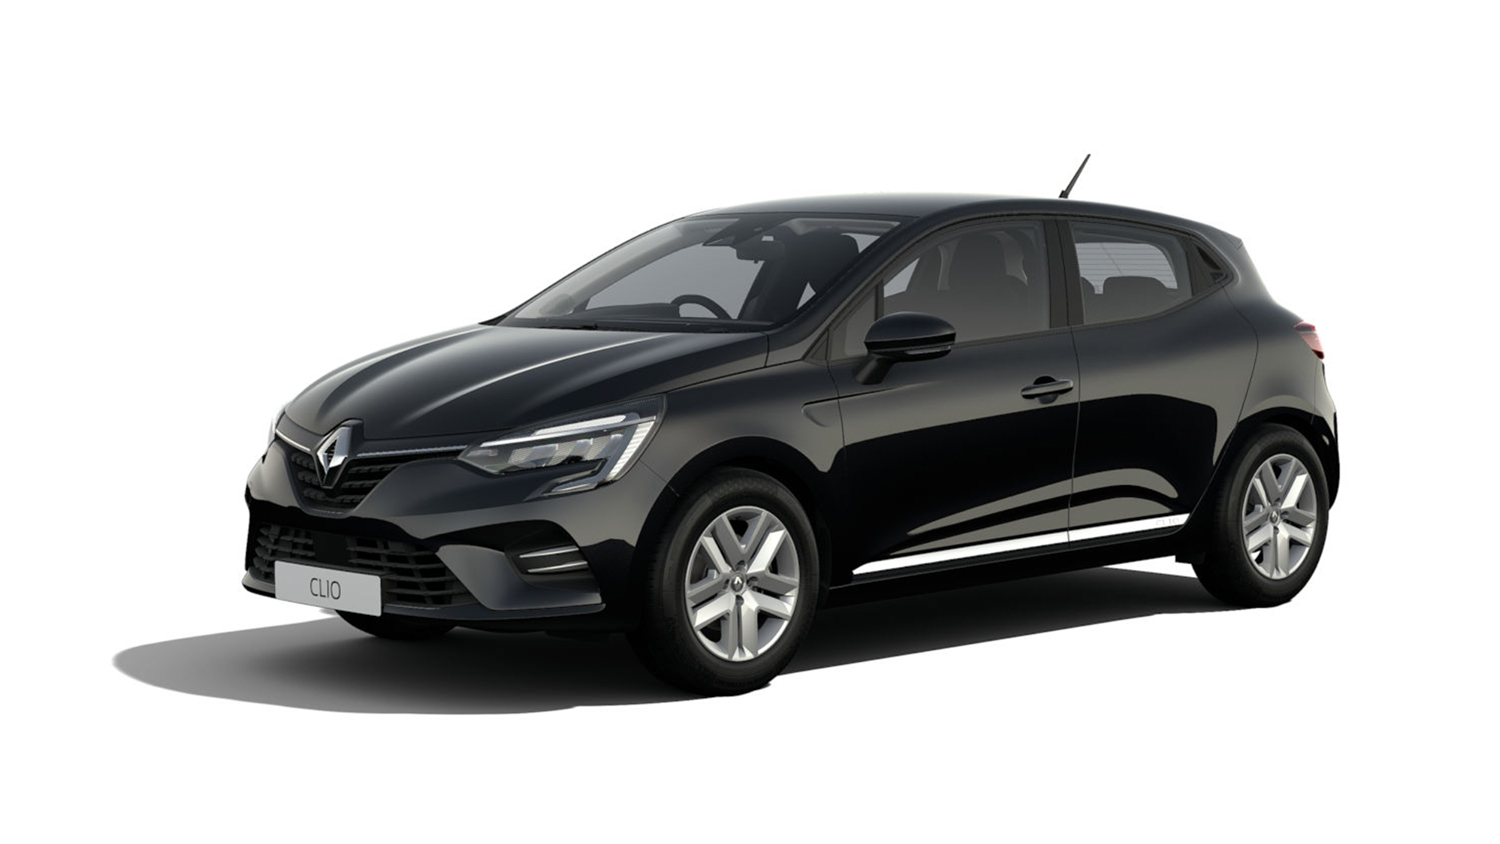 New Renault Clio E-Tech full hybrid - 5-door city car